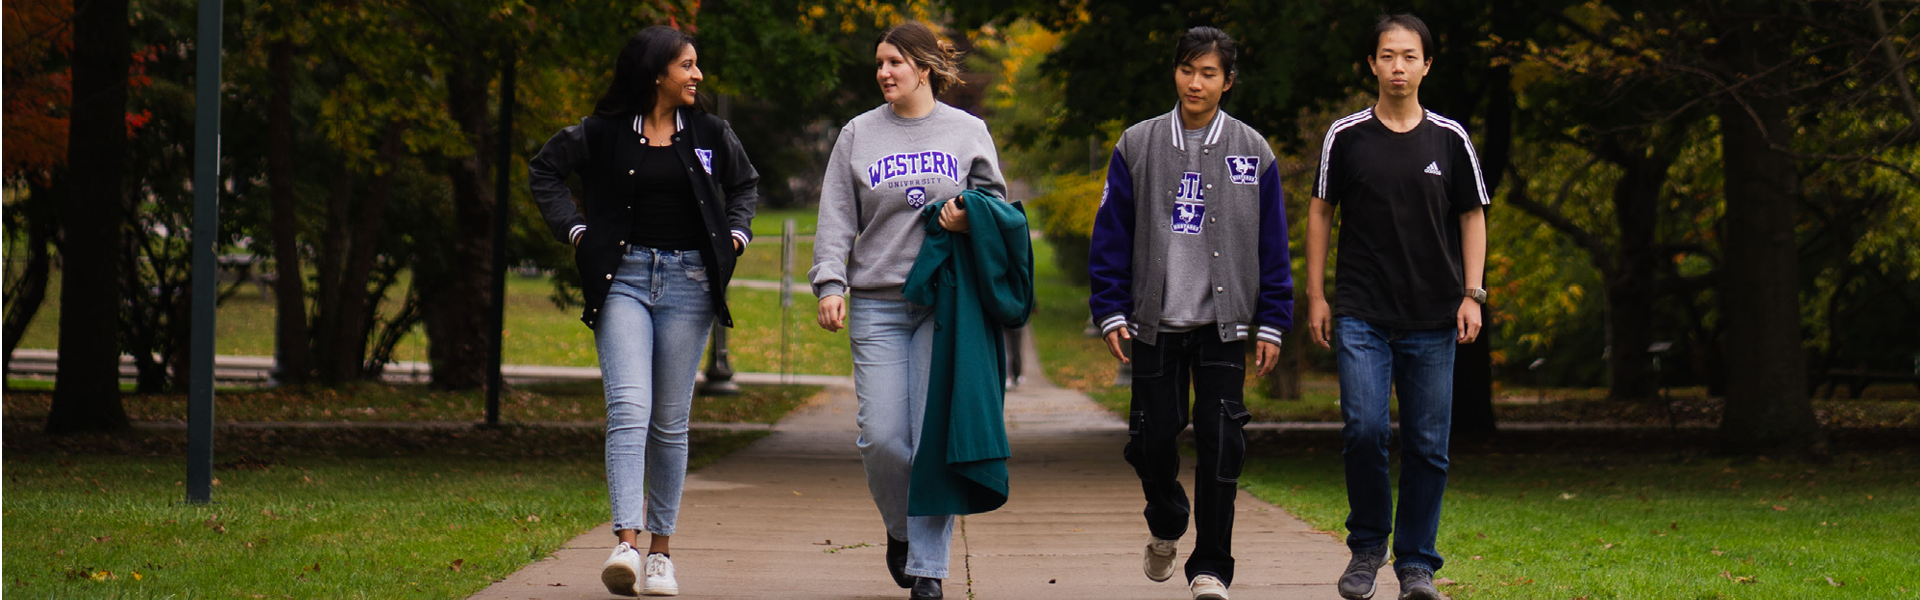 4 Western students walk on campus